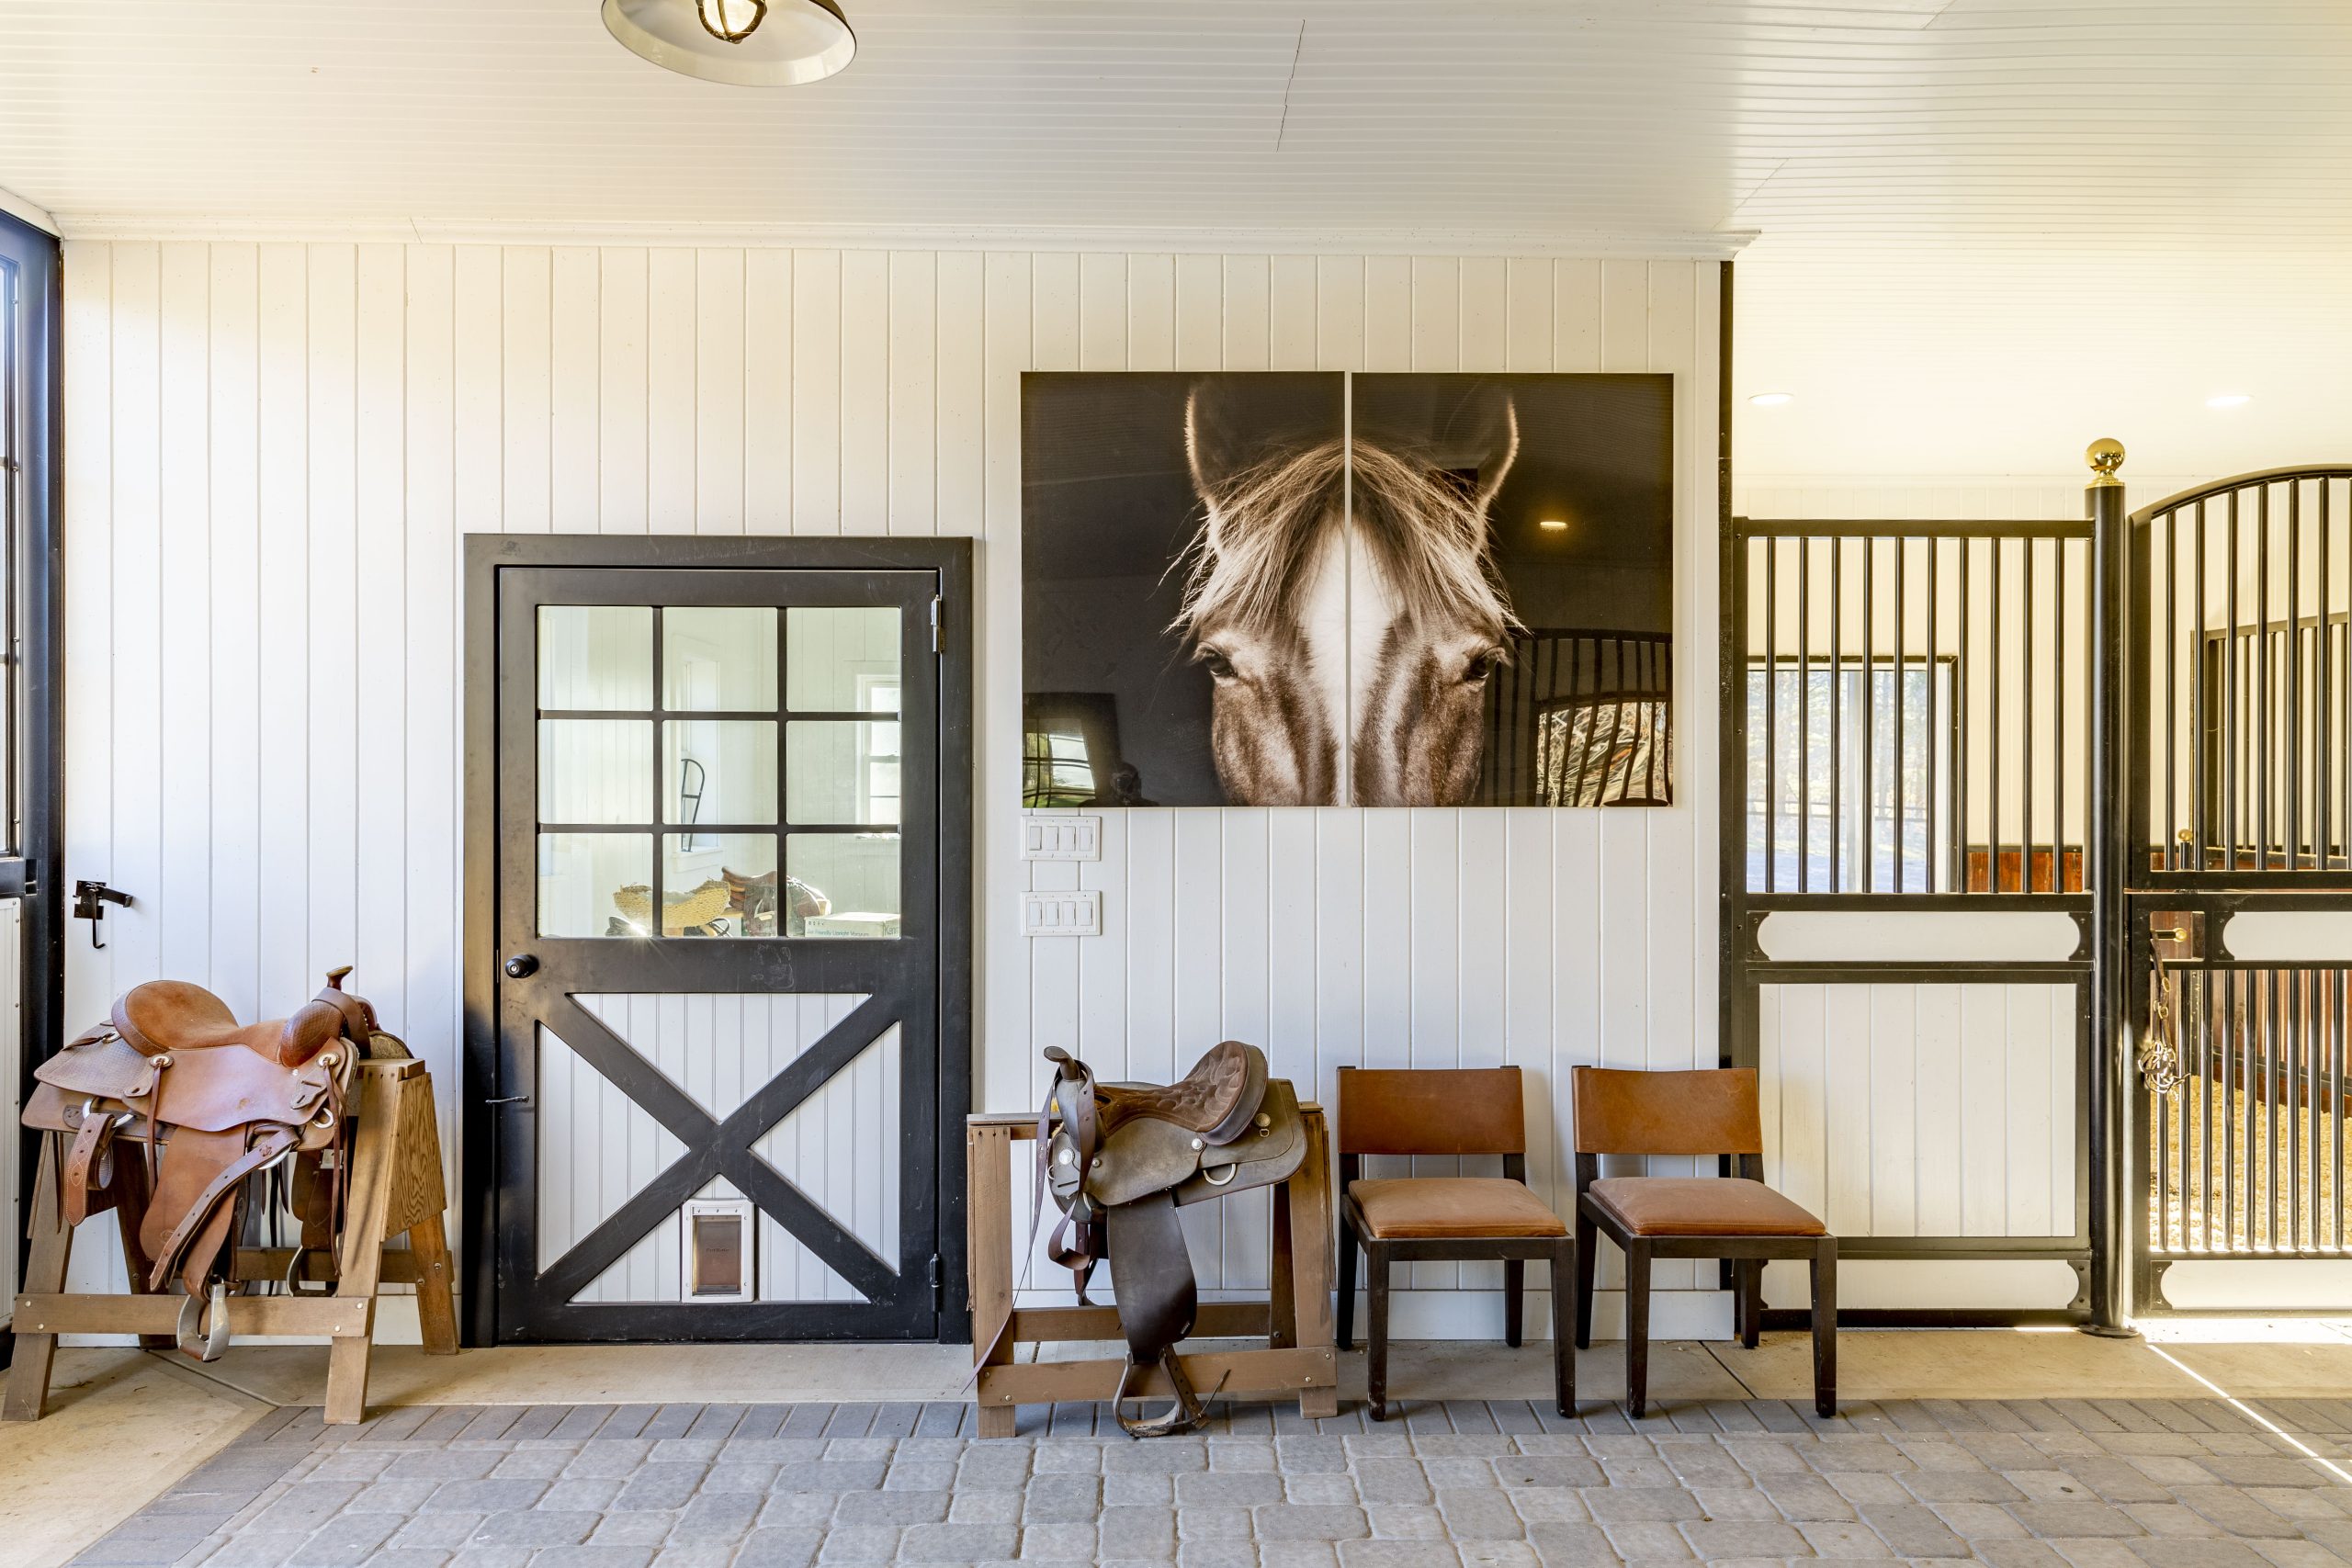 Finished horse barn interior